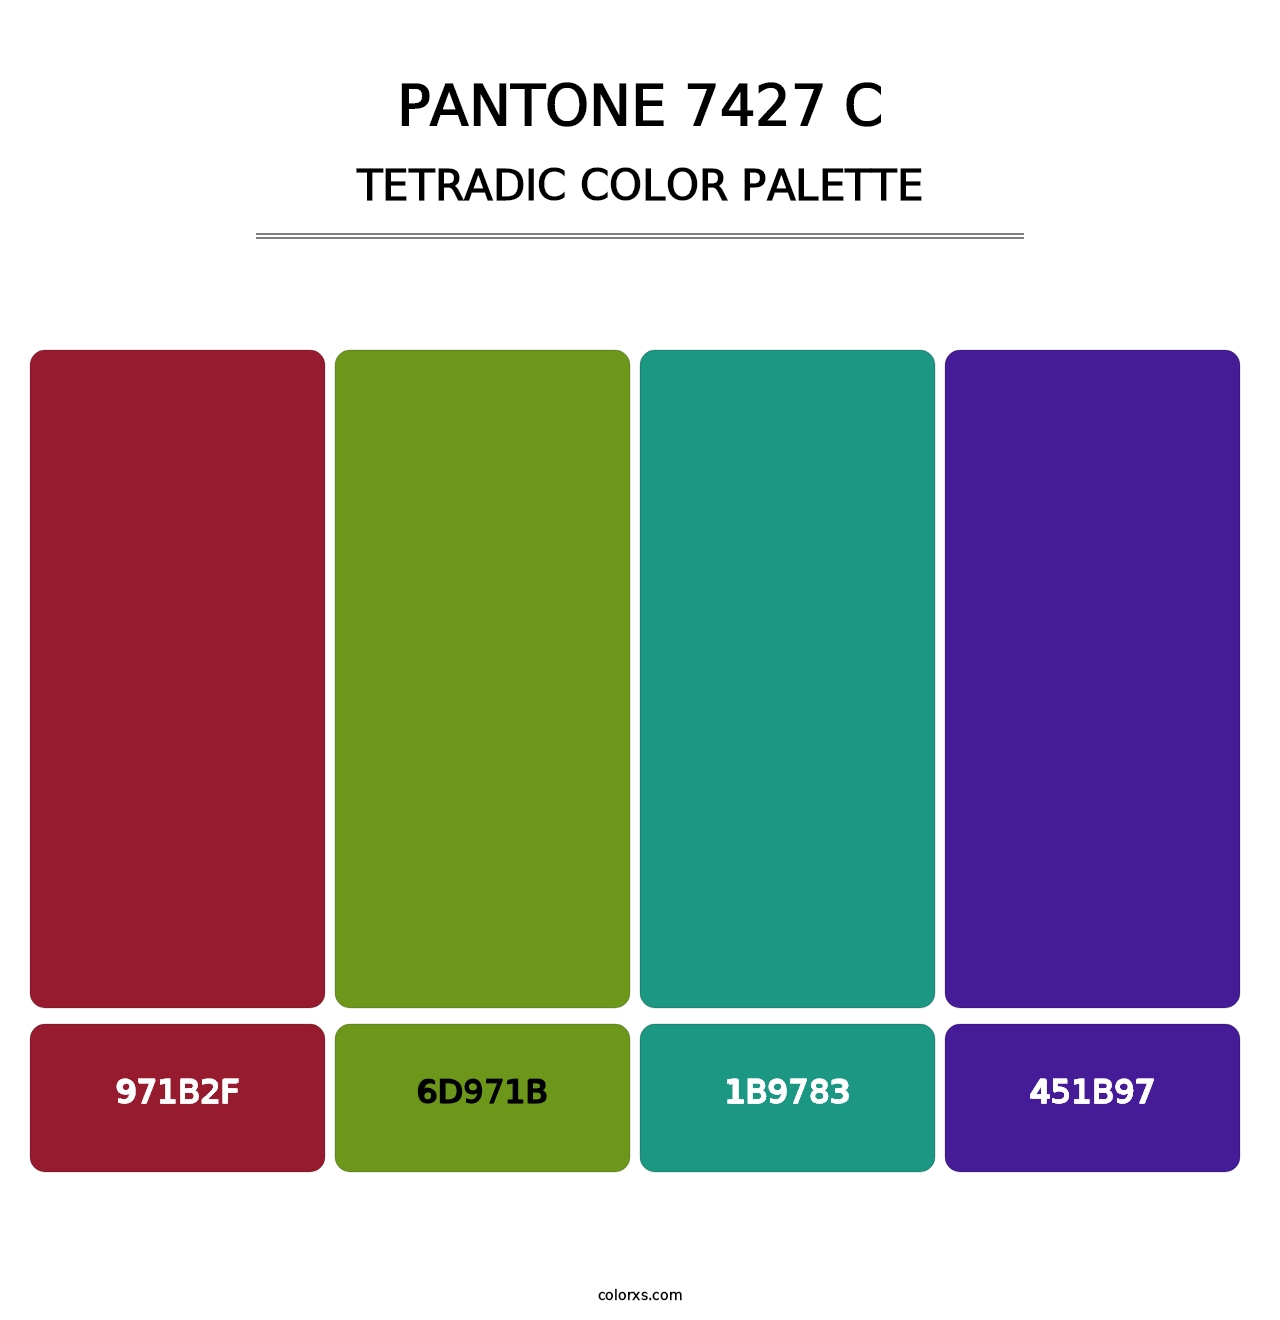 PANTONE 7427 C - Tetradic Color Palette